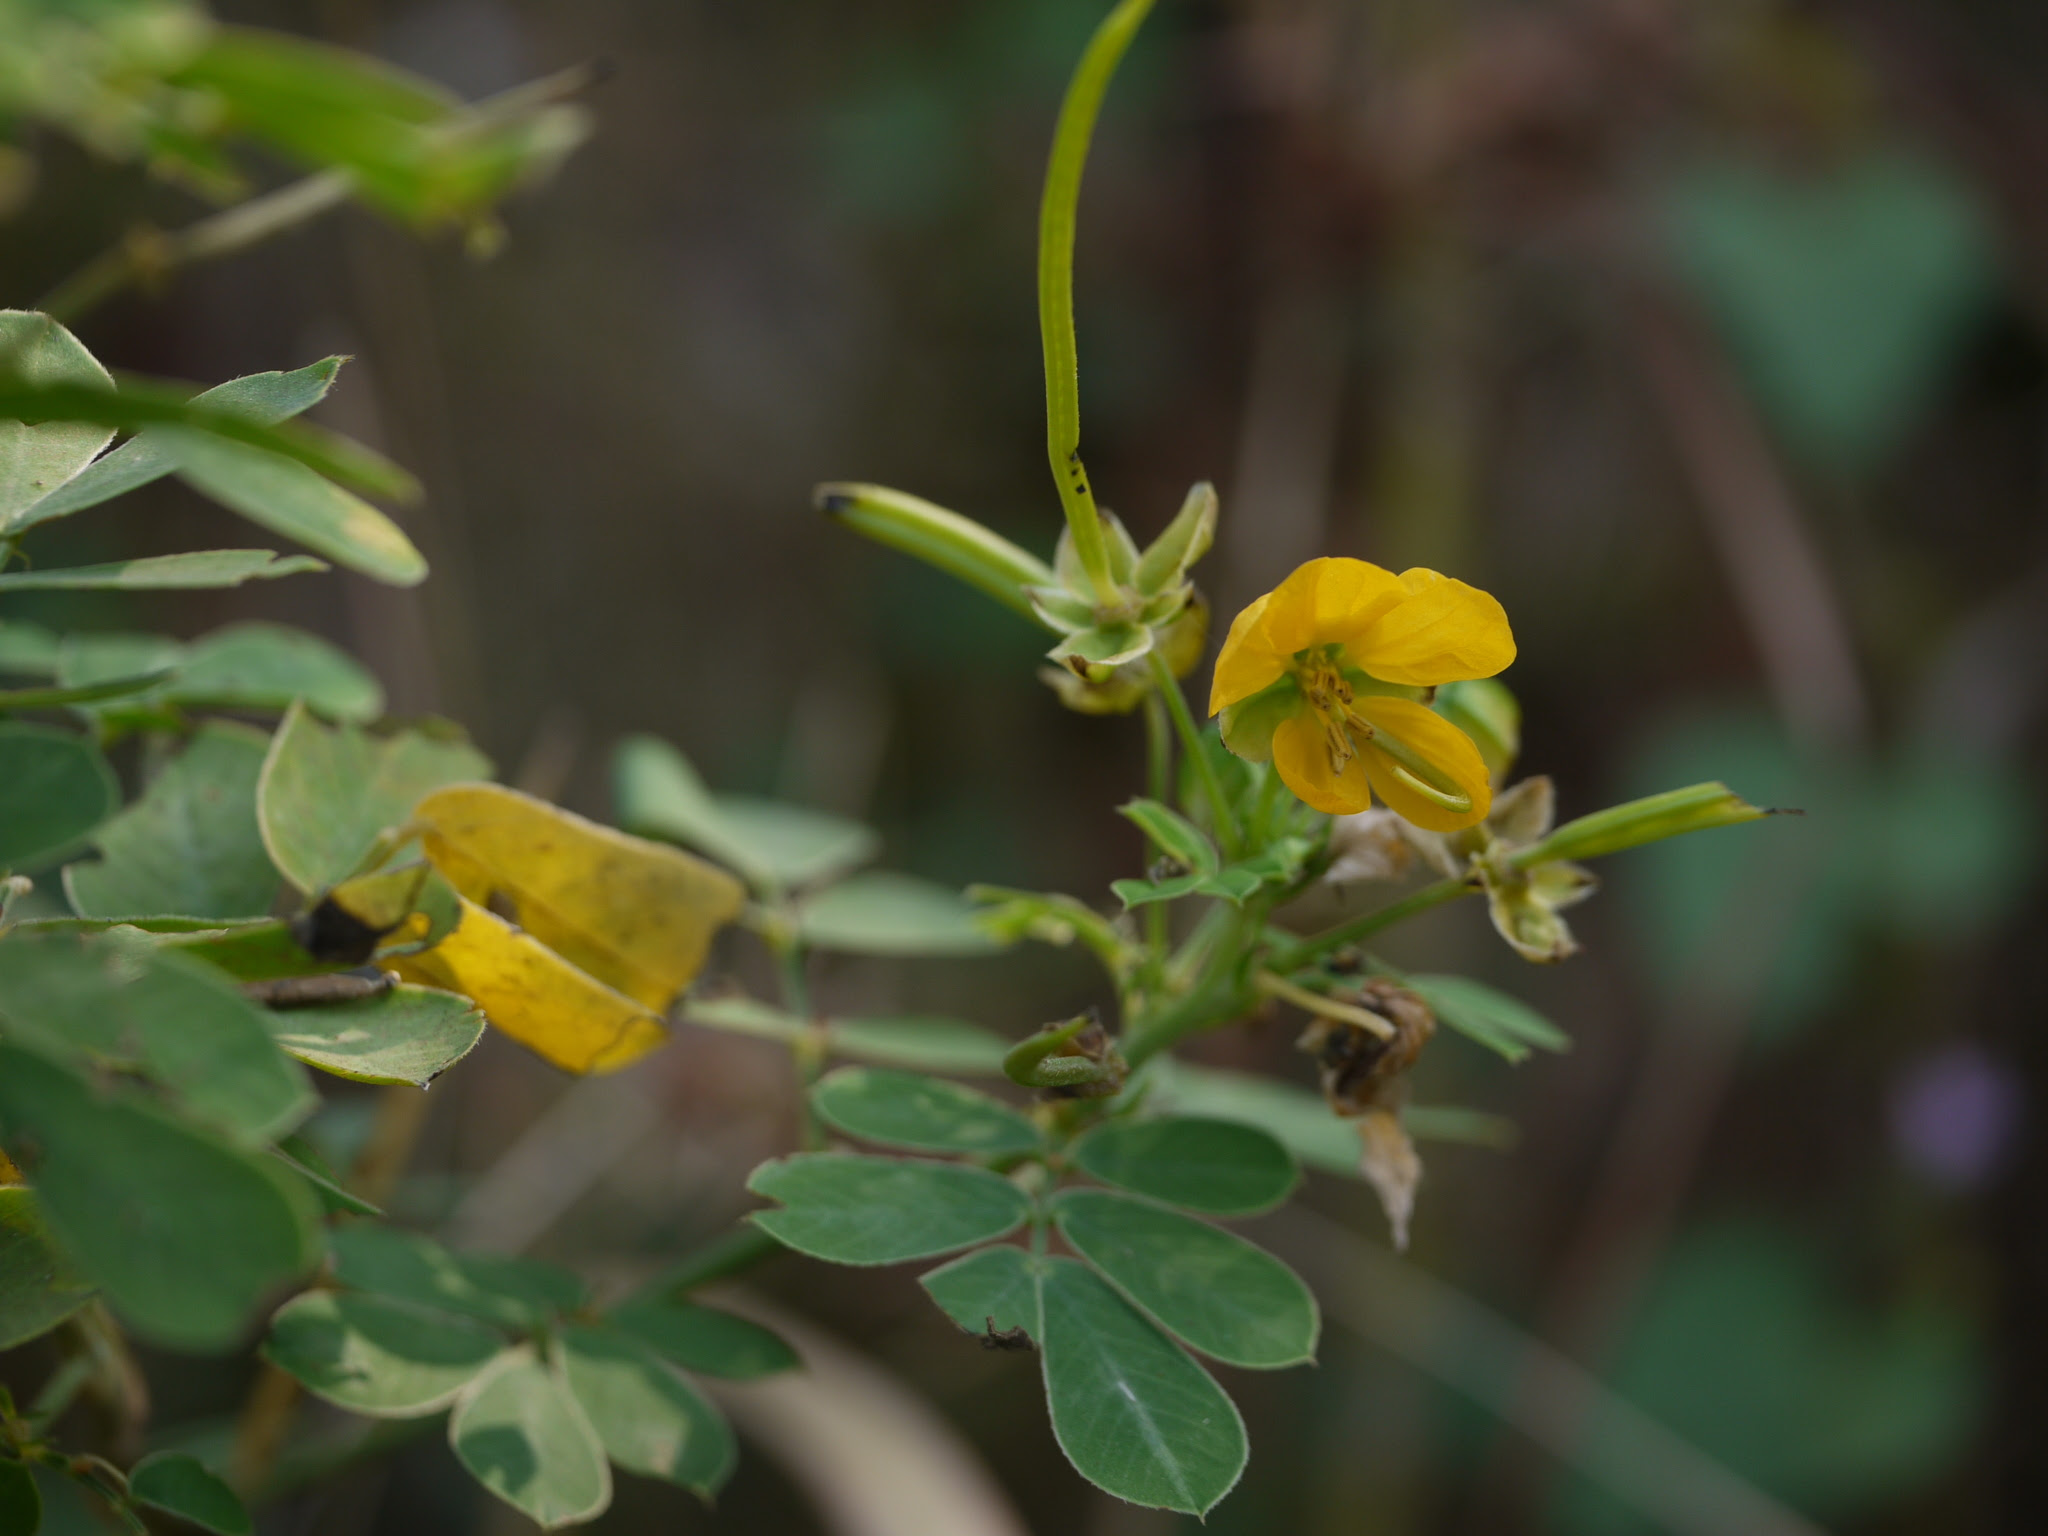 Senna obtusifolia (L.) H.S.Irwin & Barneby